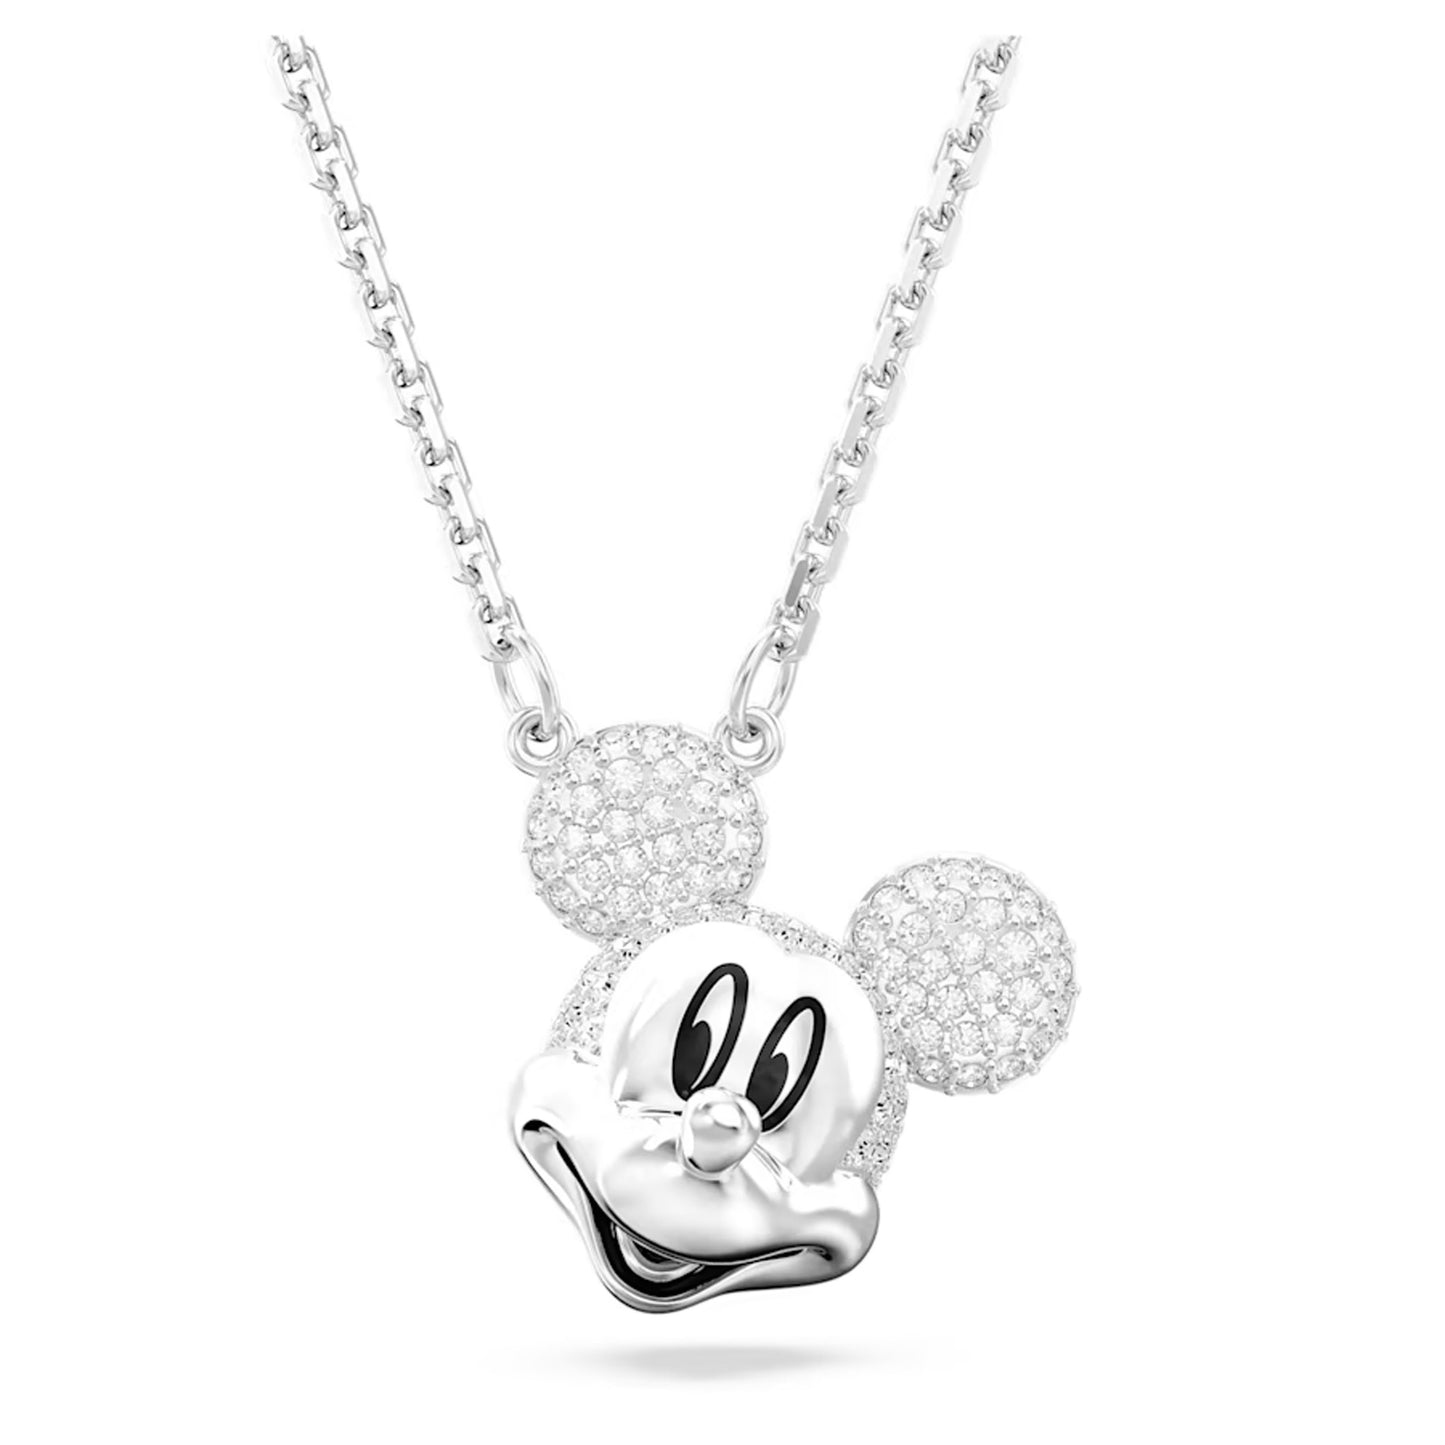 Disney Mickey Mouse pendant